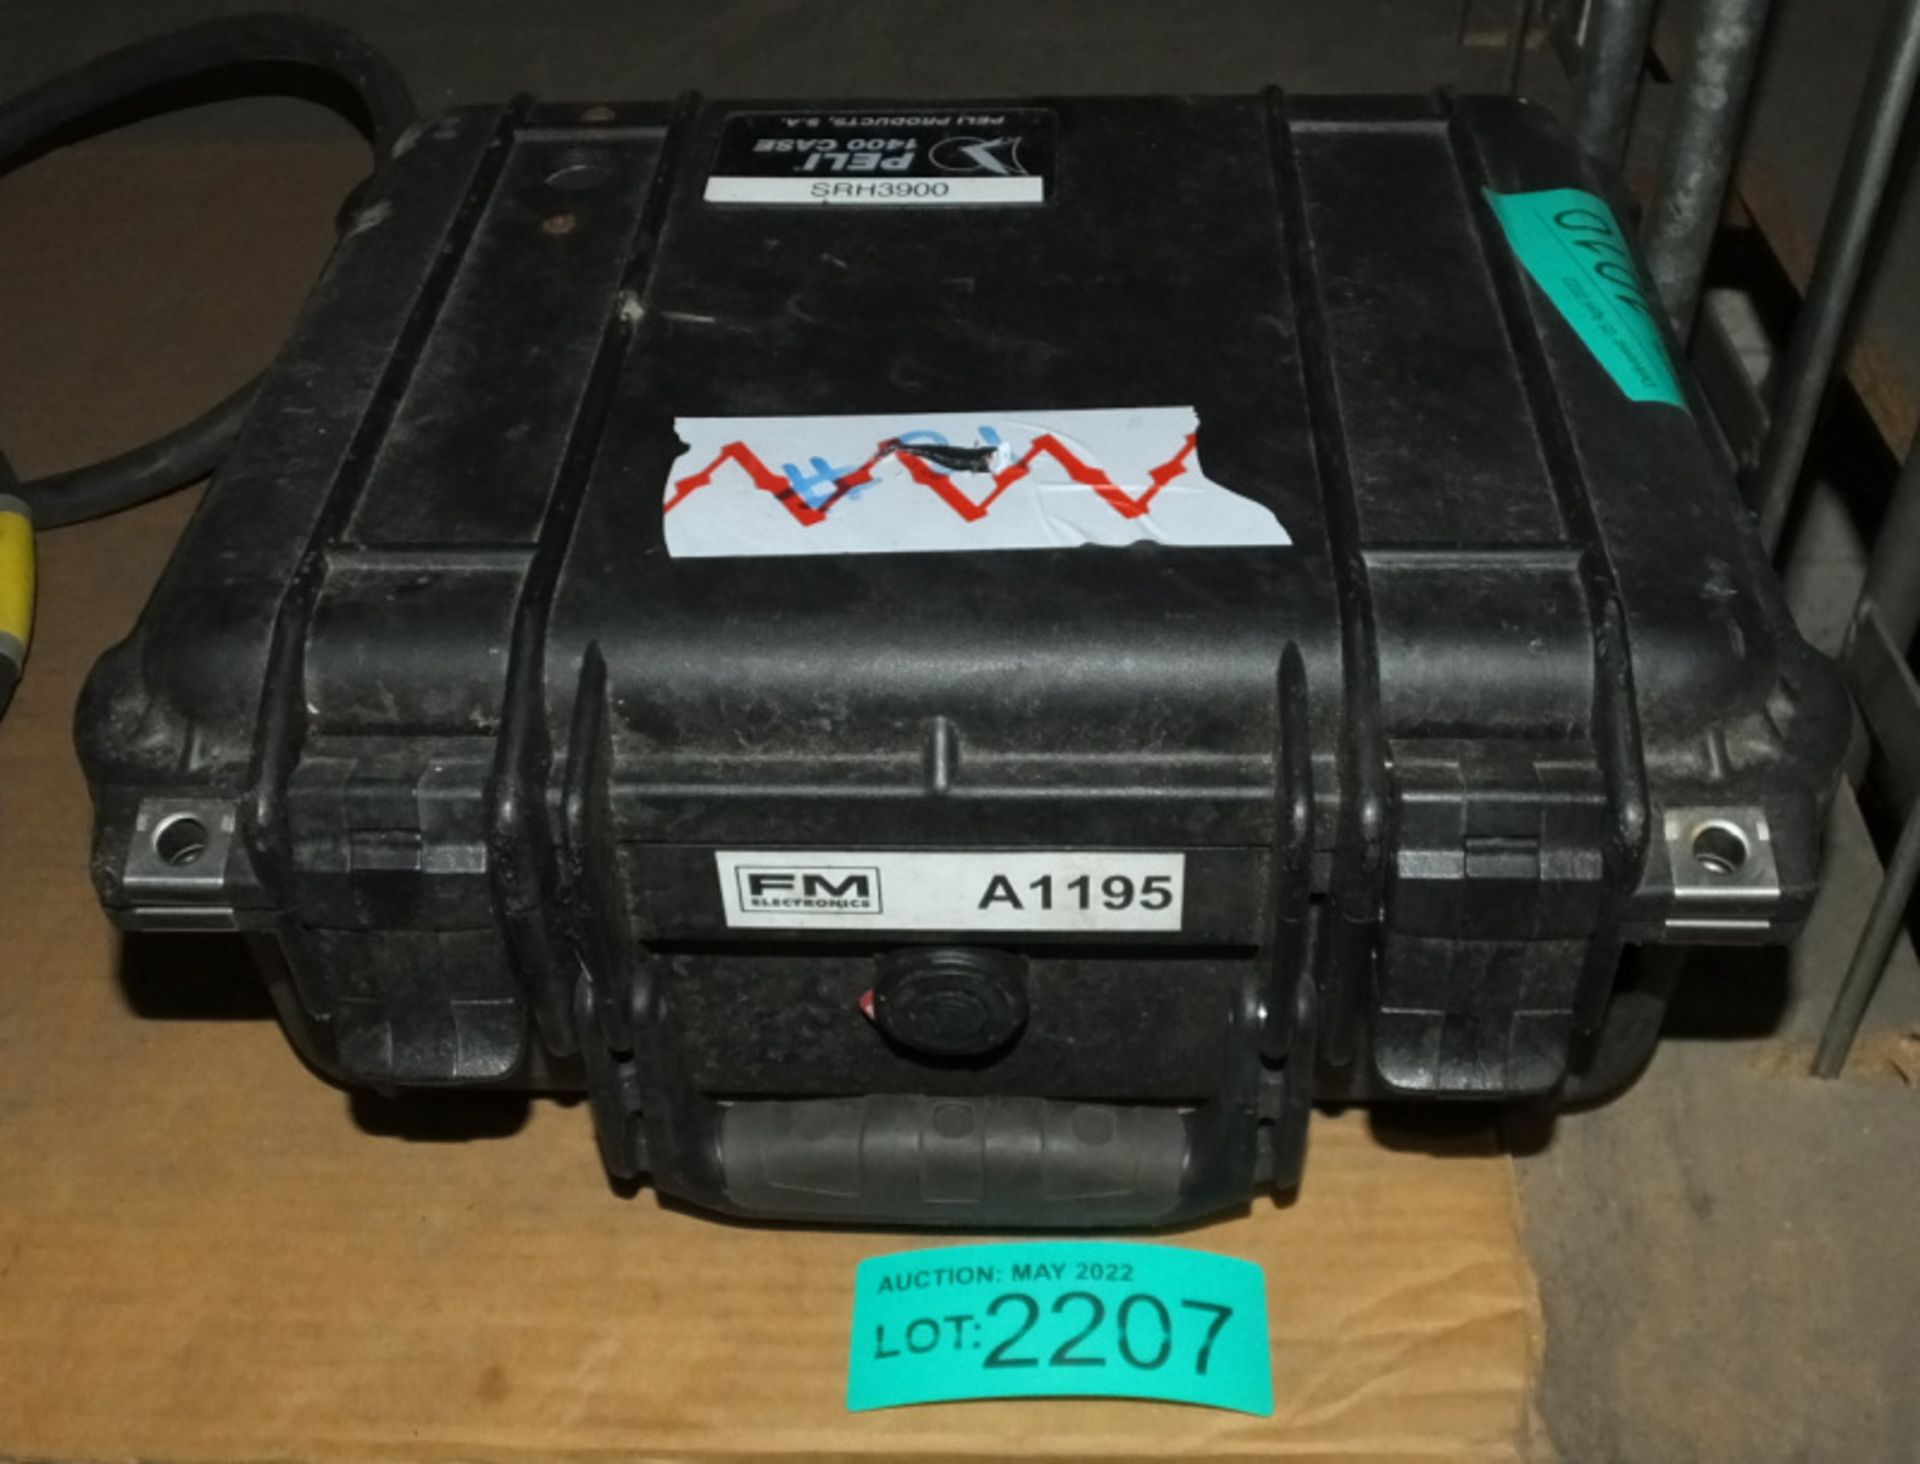 FM electronics FM2000 alarm module in peli case - Image 3 of 3